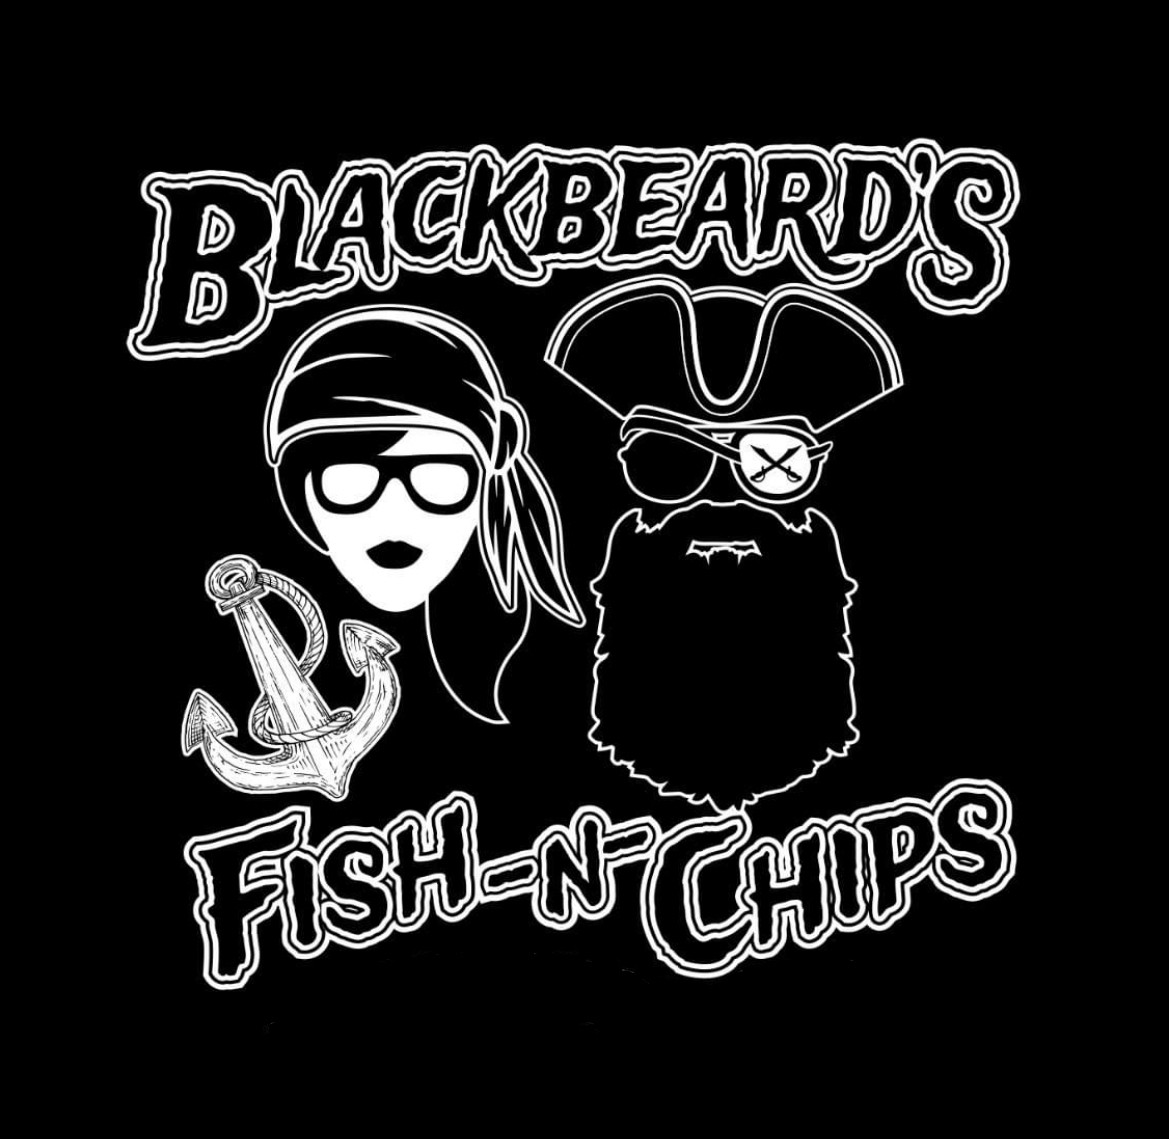 Blackbeard’s Fish n Chips